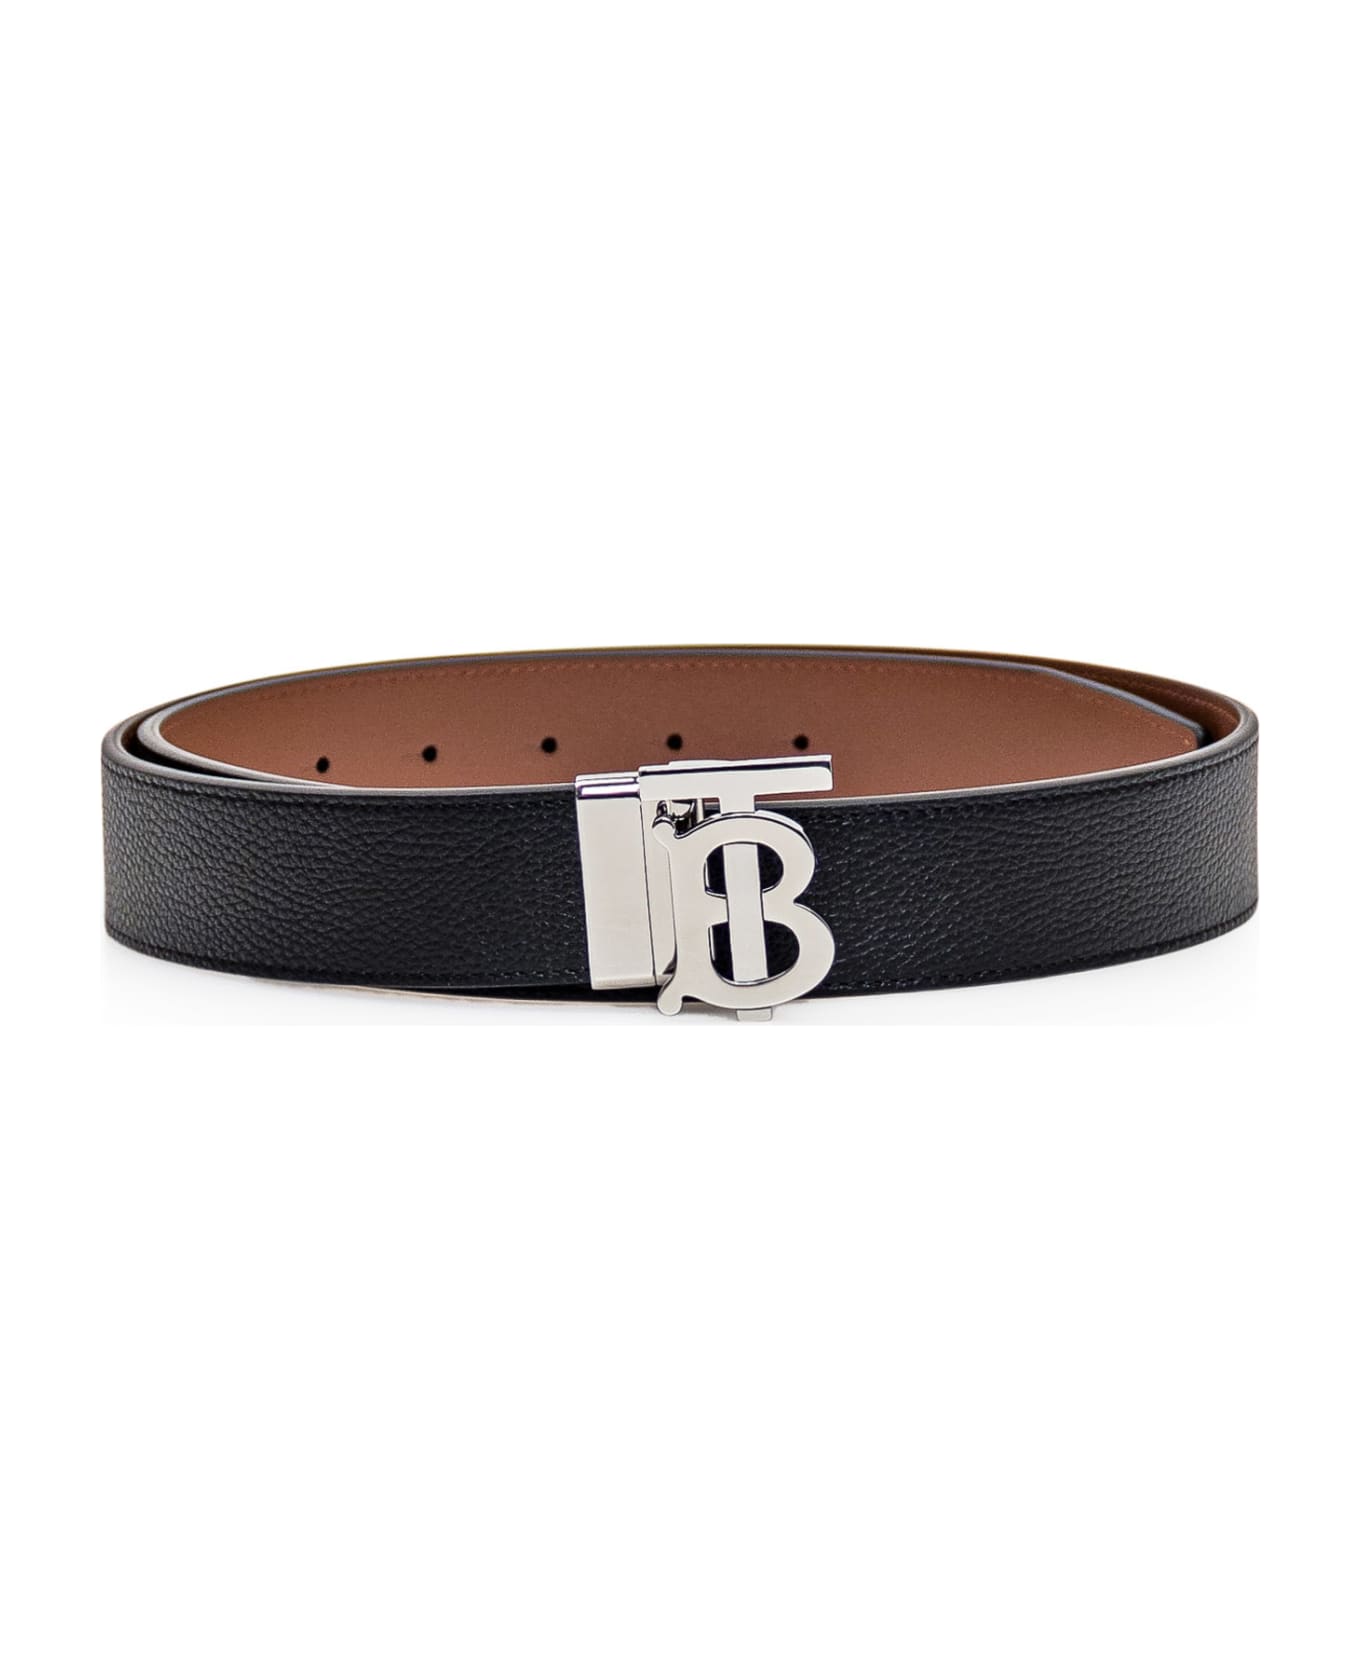 Burberry Reversible Leather Belt - Black/tan/silver